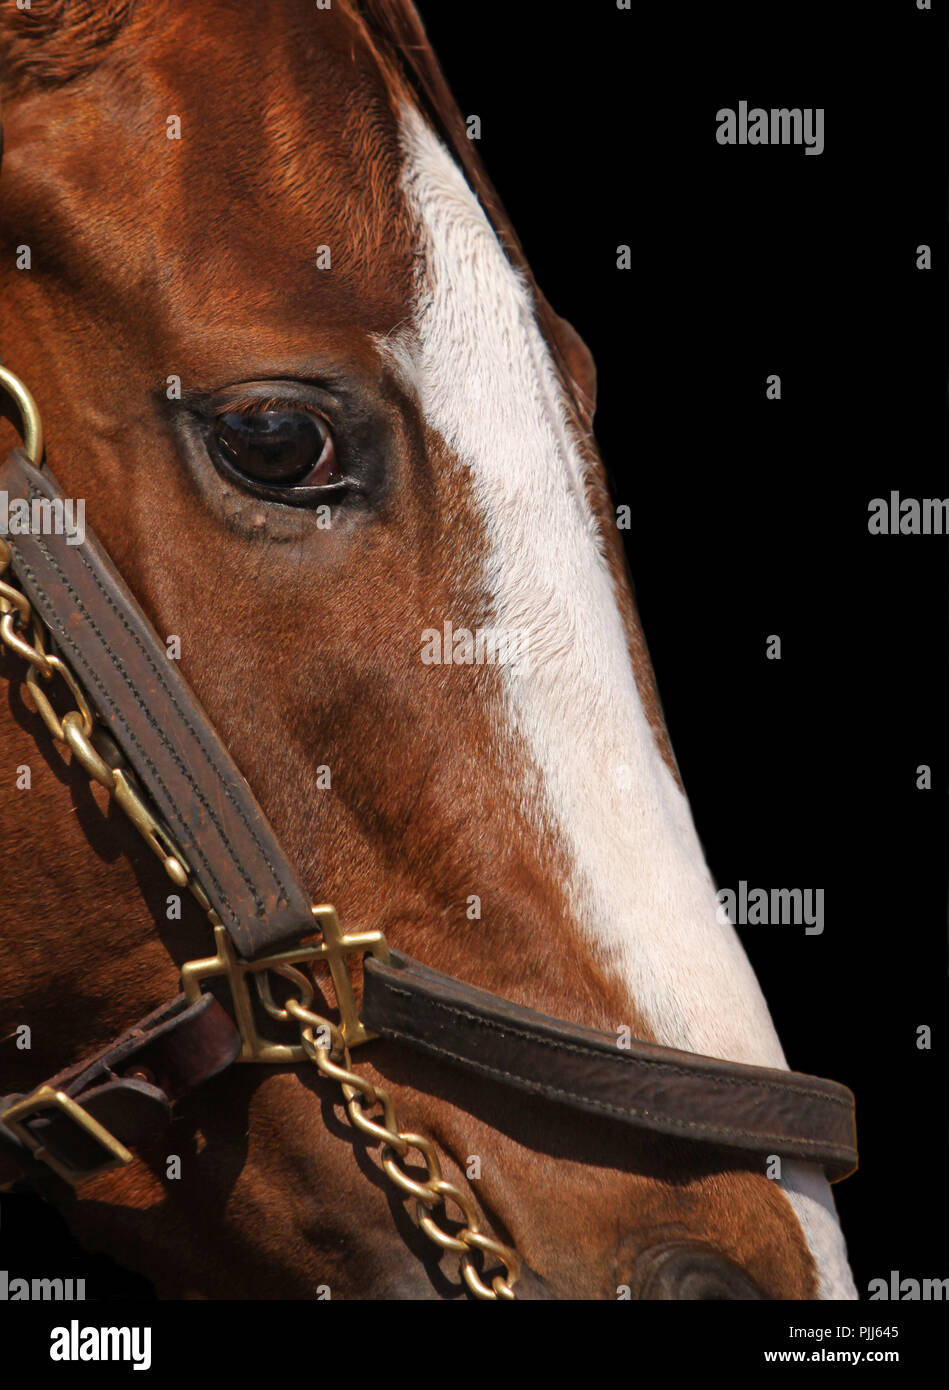 Close-up face of Thoroughbred racehorse with white blaze wearing bridle. Photo on black background; focus on horses eye. Stock Photo